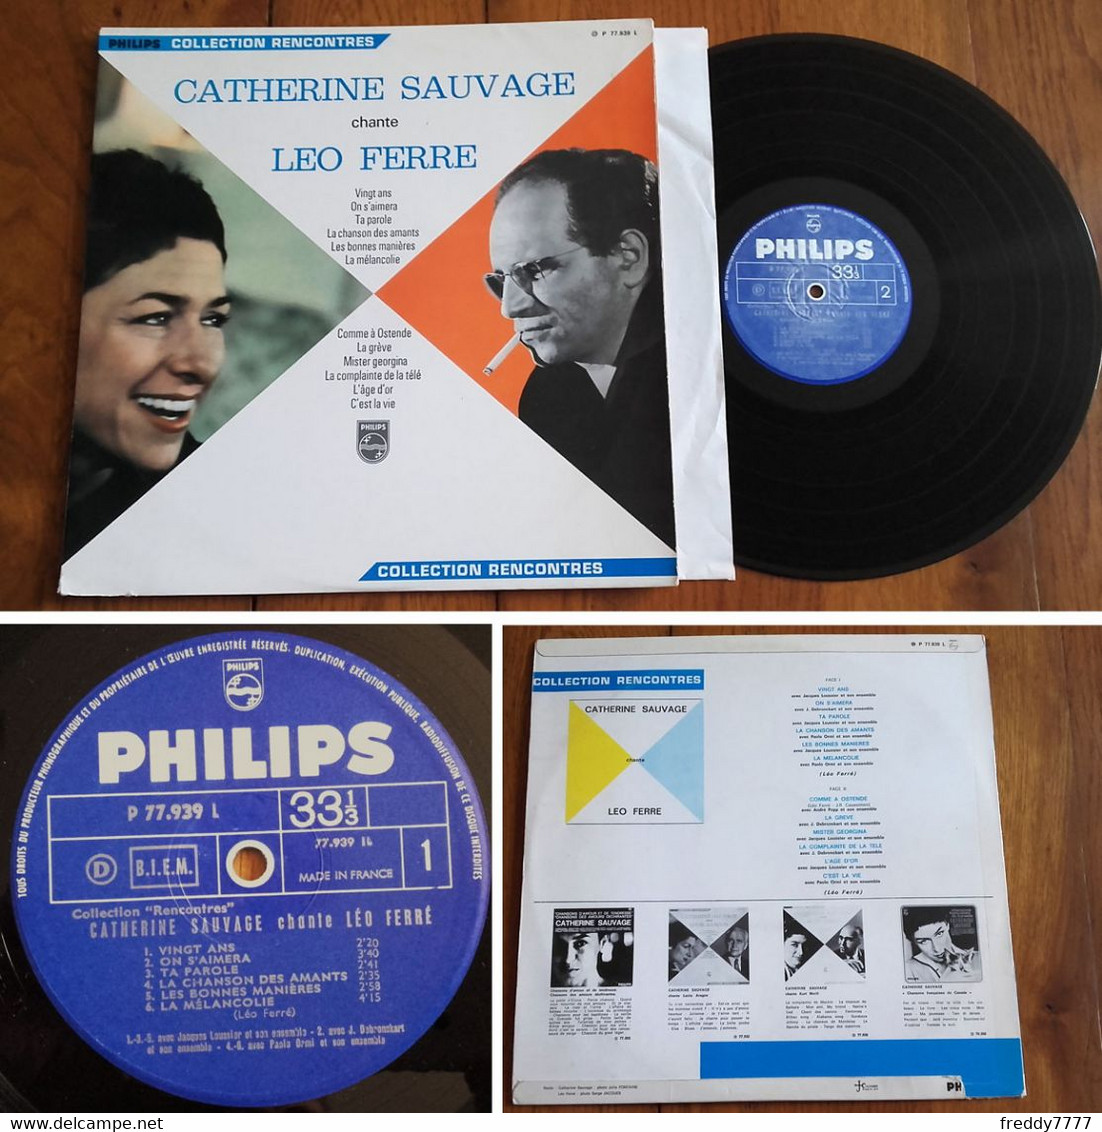 RARE French LP 33t RPM BIEM (12") CATHERINE SAUVAGE Chante LEO FERRE (1966) - Verzameluitgaven